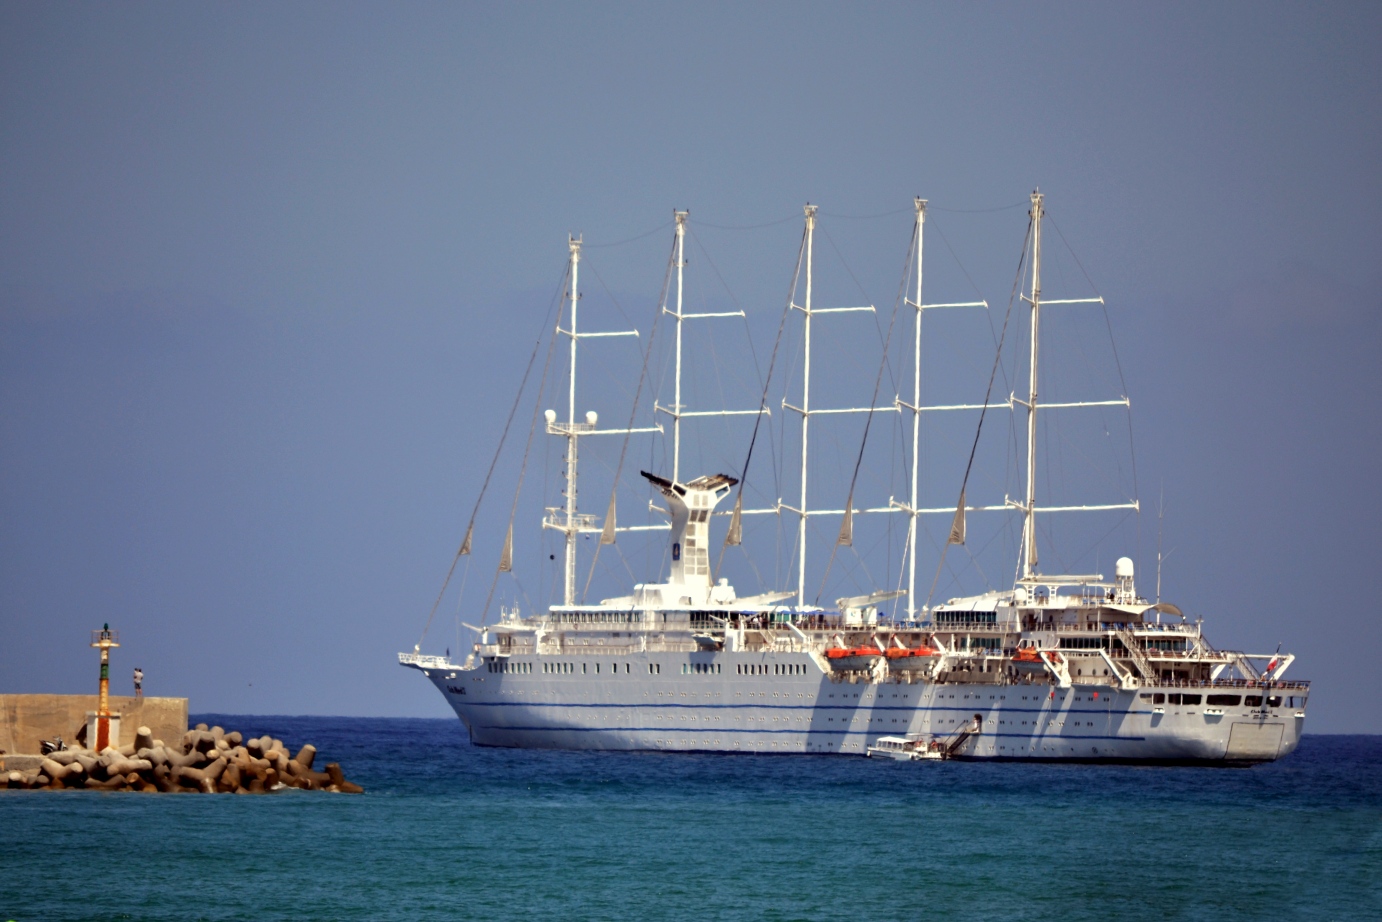 Club Med 2 @ Rethimno - Club Med 2 - Shipfriends